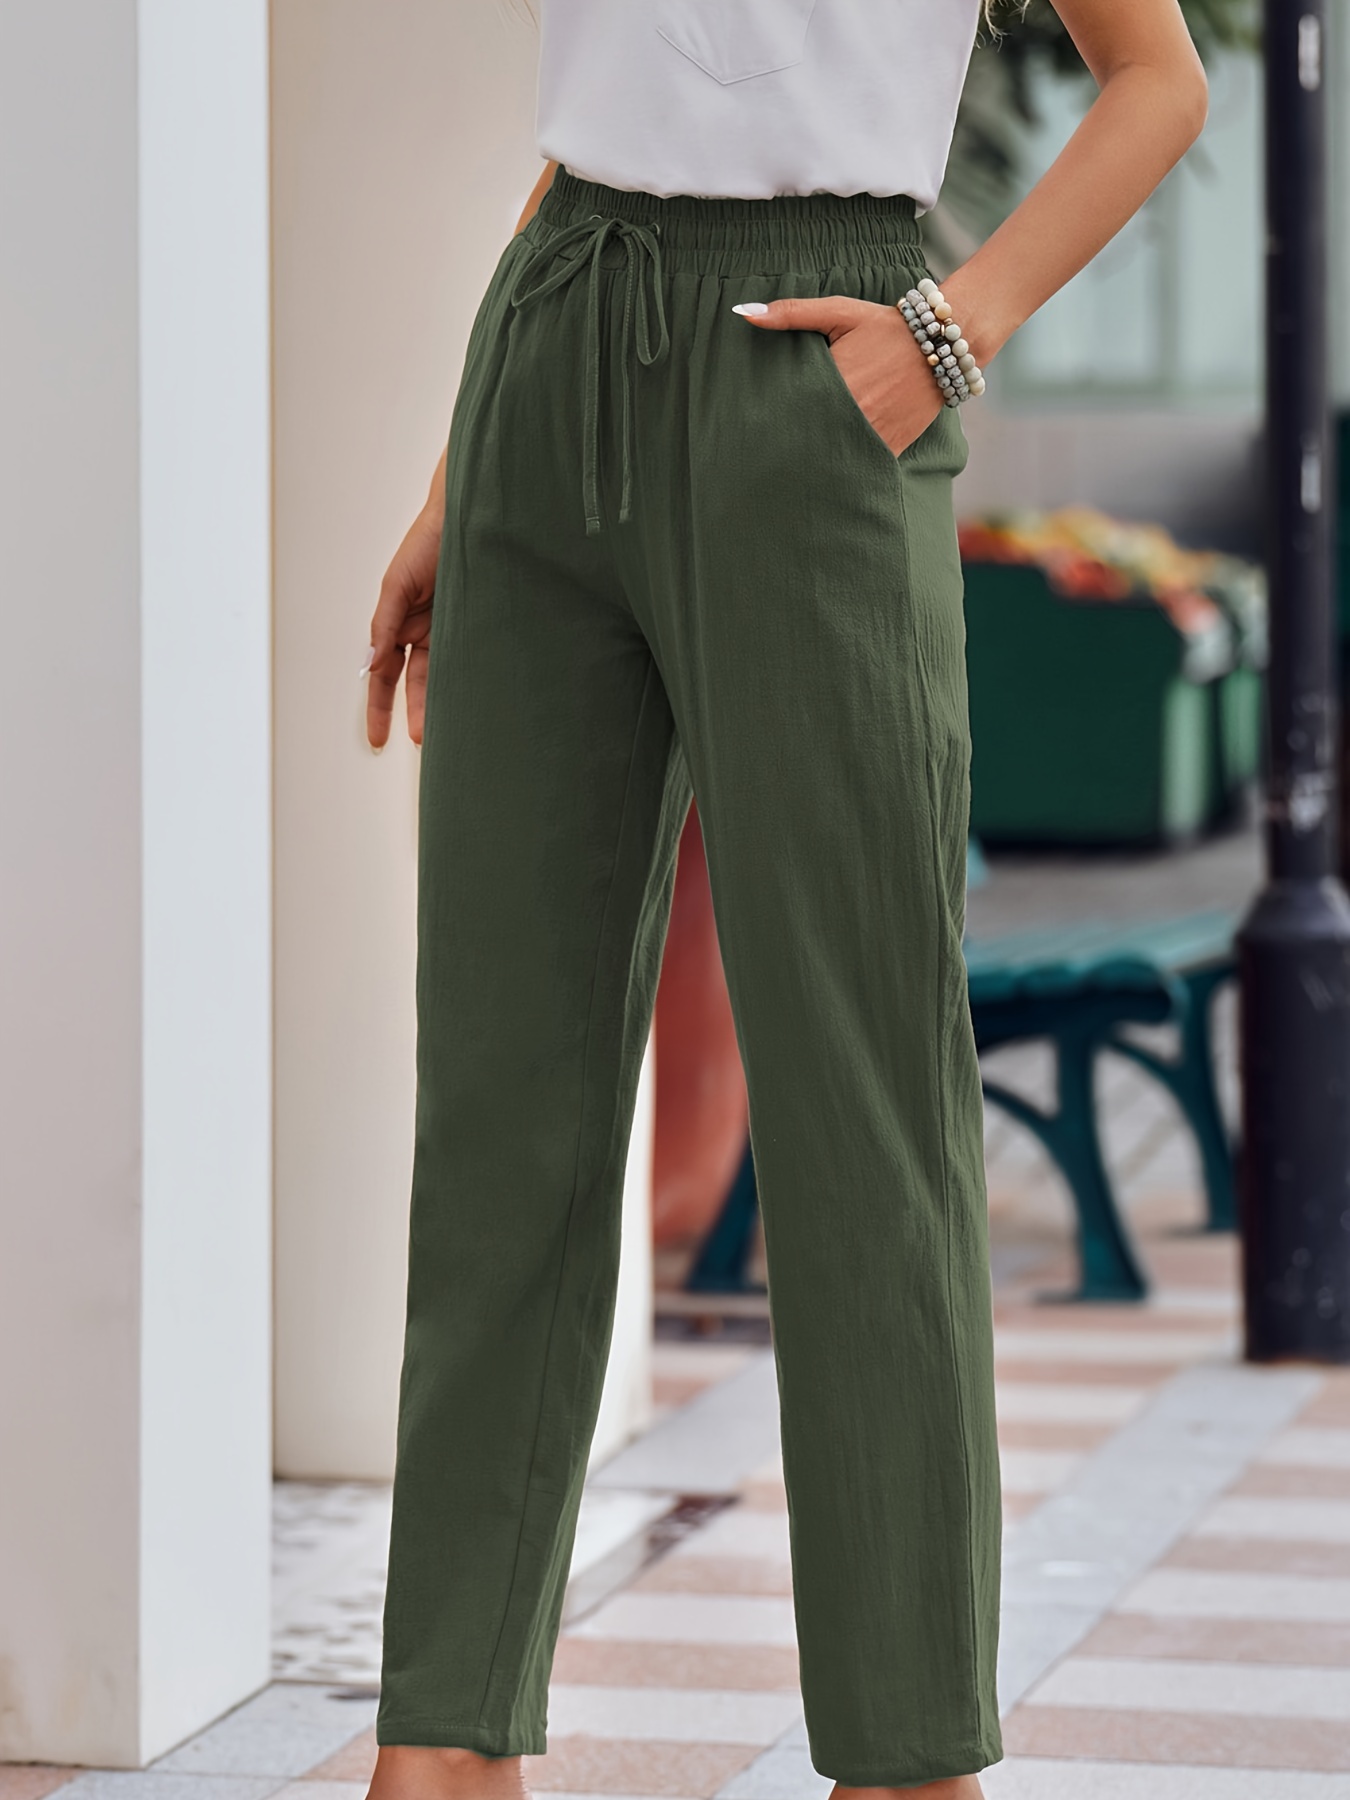 Olive Green Cargo Pants - Straight Leg Pants - Drawstring Pants